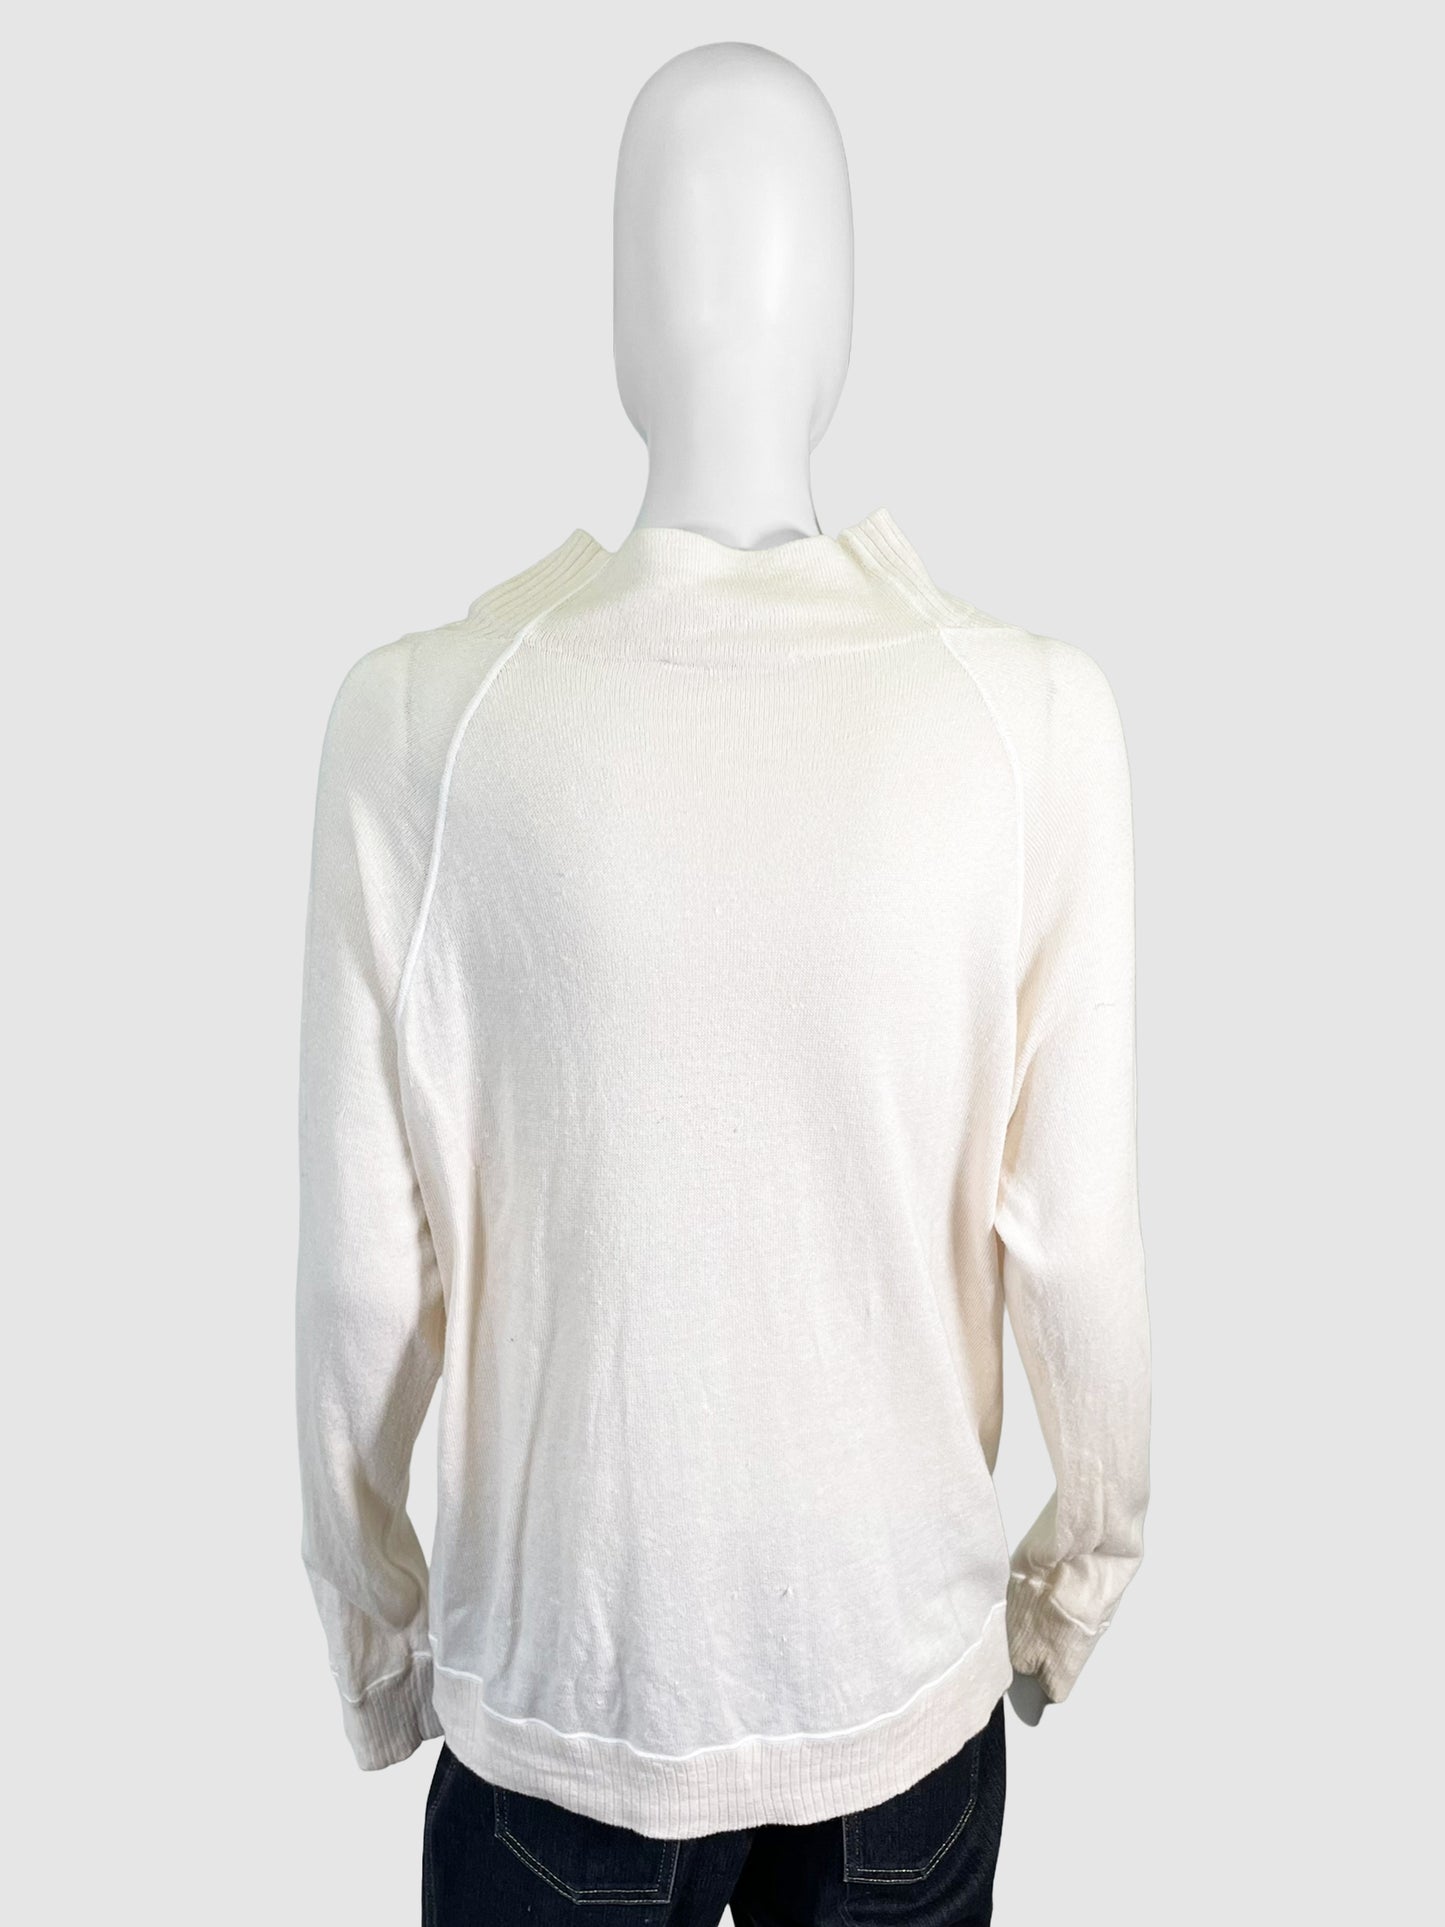 Hermes Cream Full-Zip Sweater - Size M